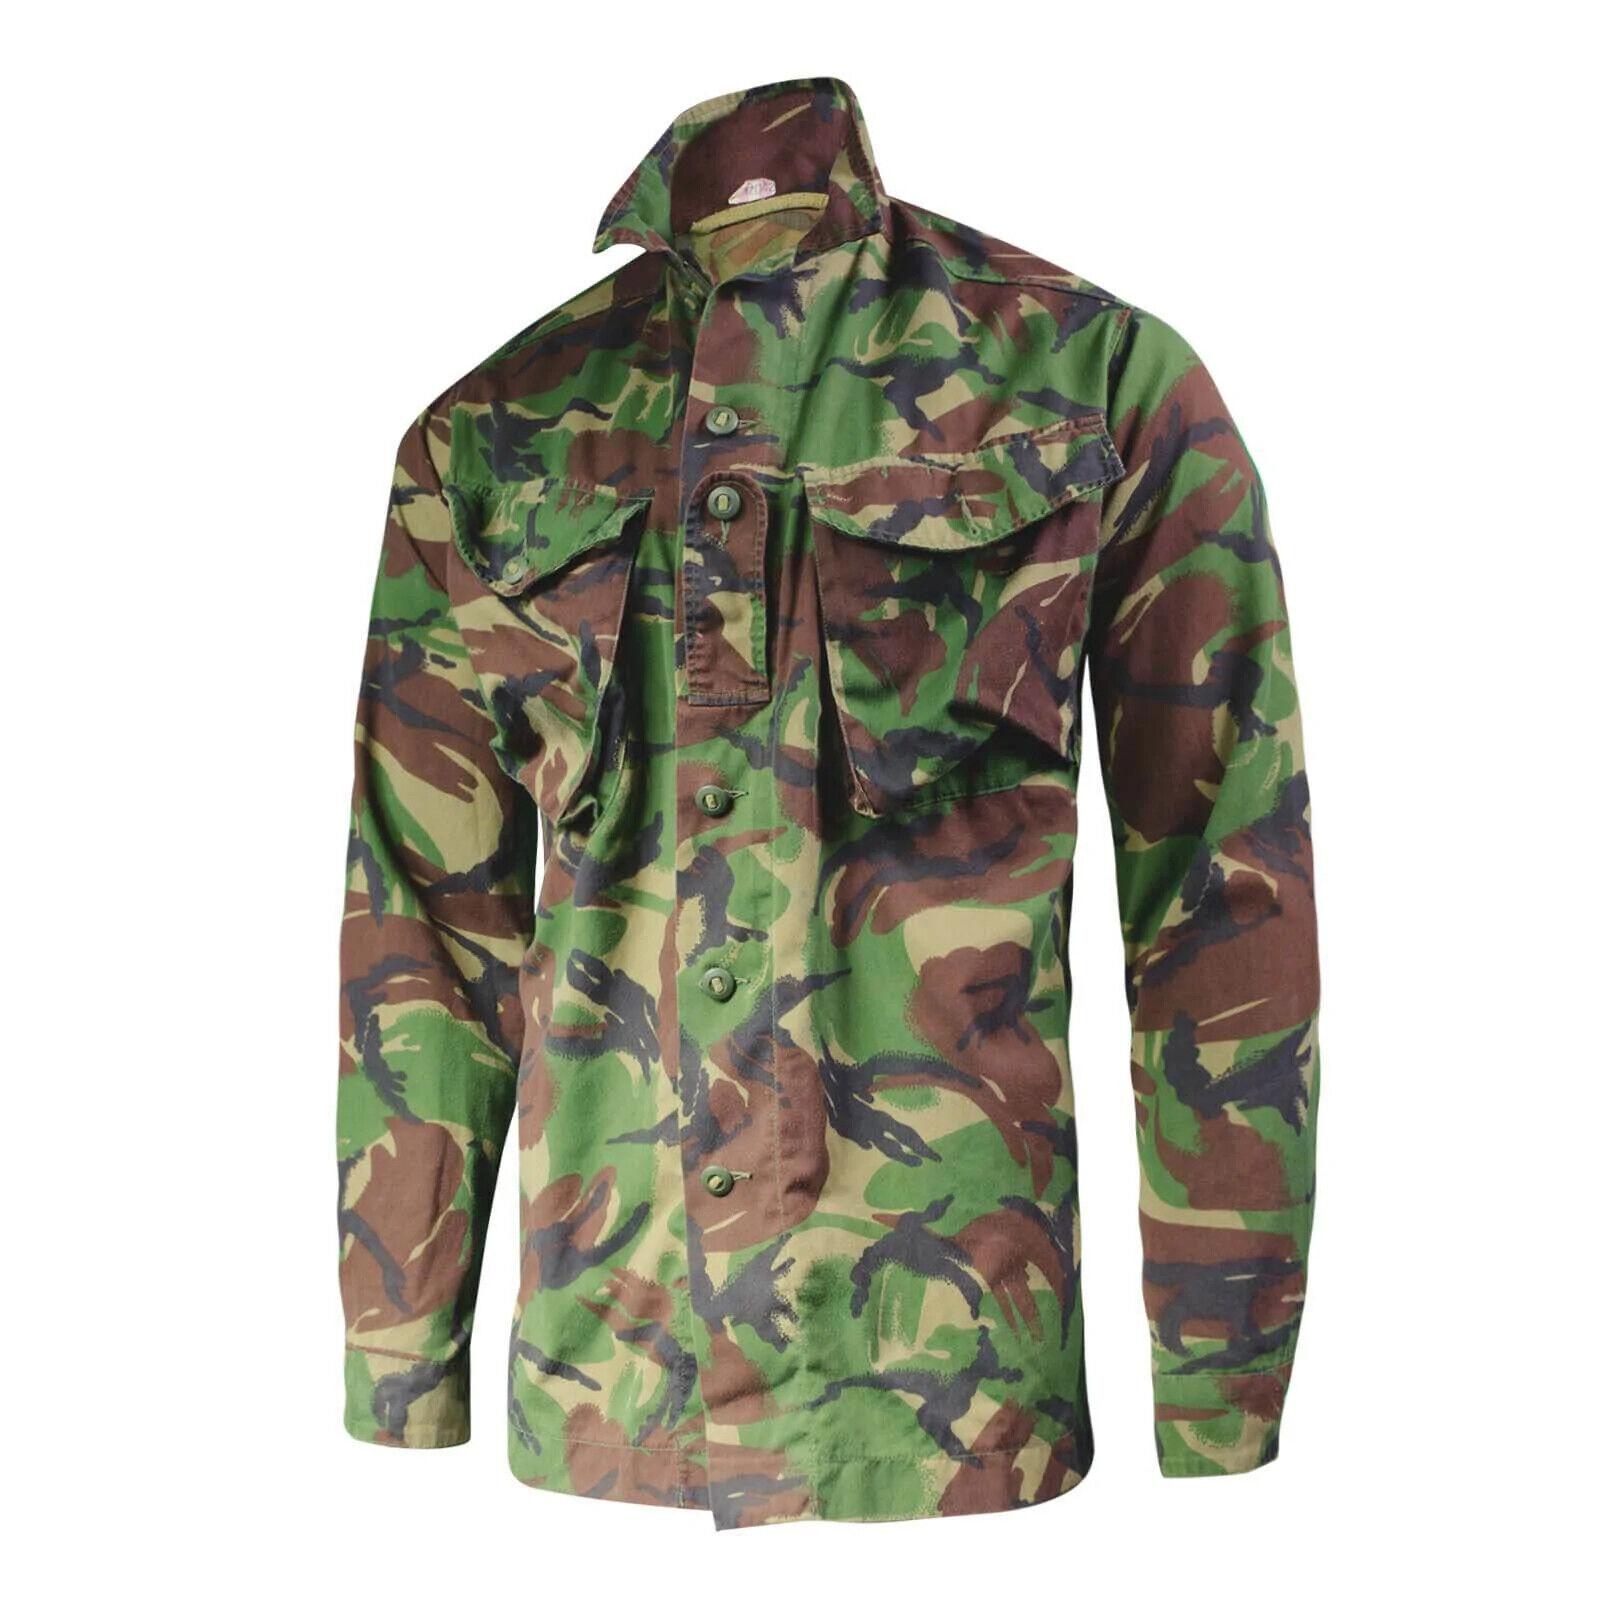 British Army Barrack Shirt Jacket Army Military Cotton